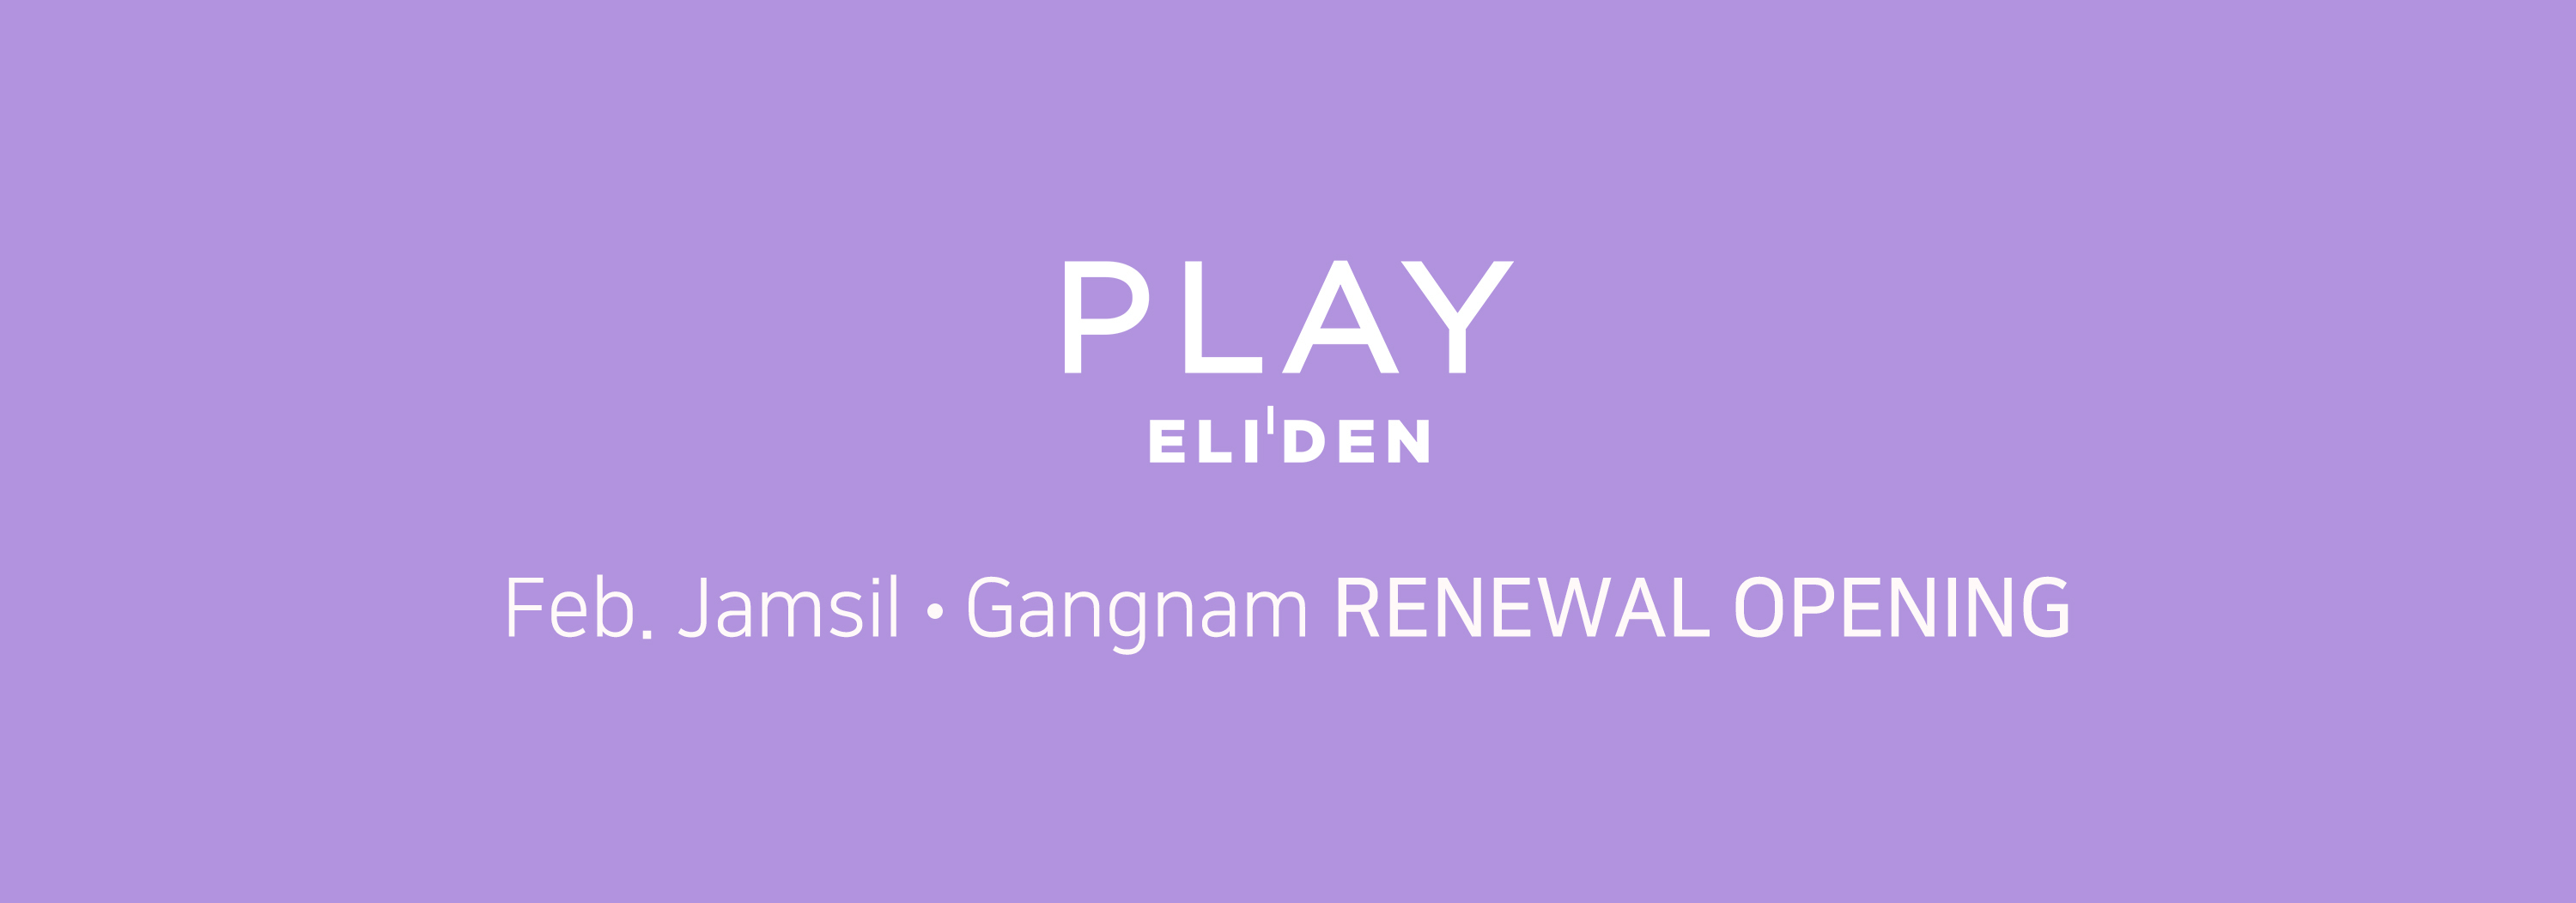 eliden_play.jpg